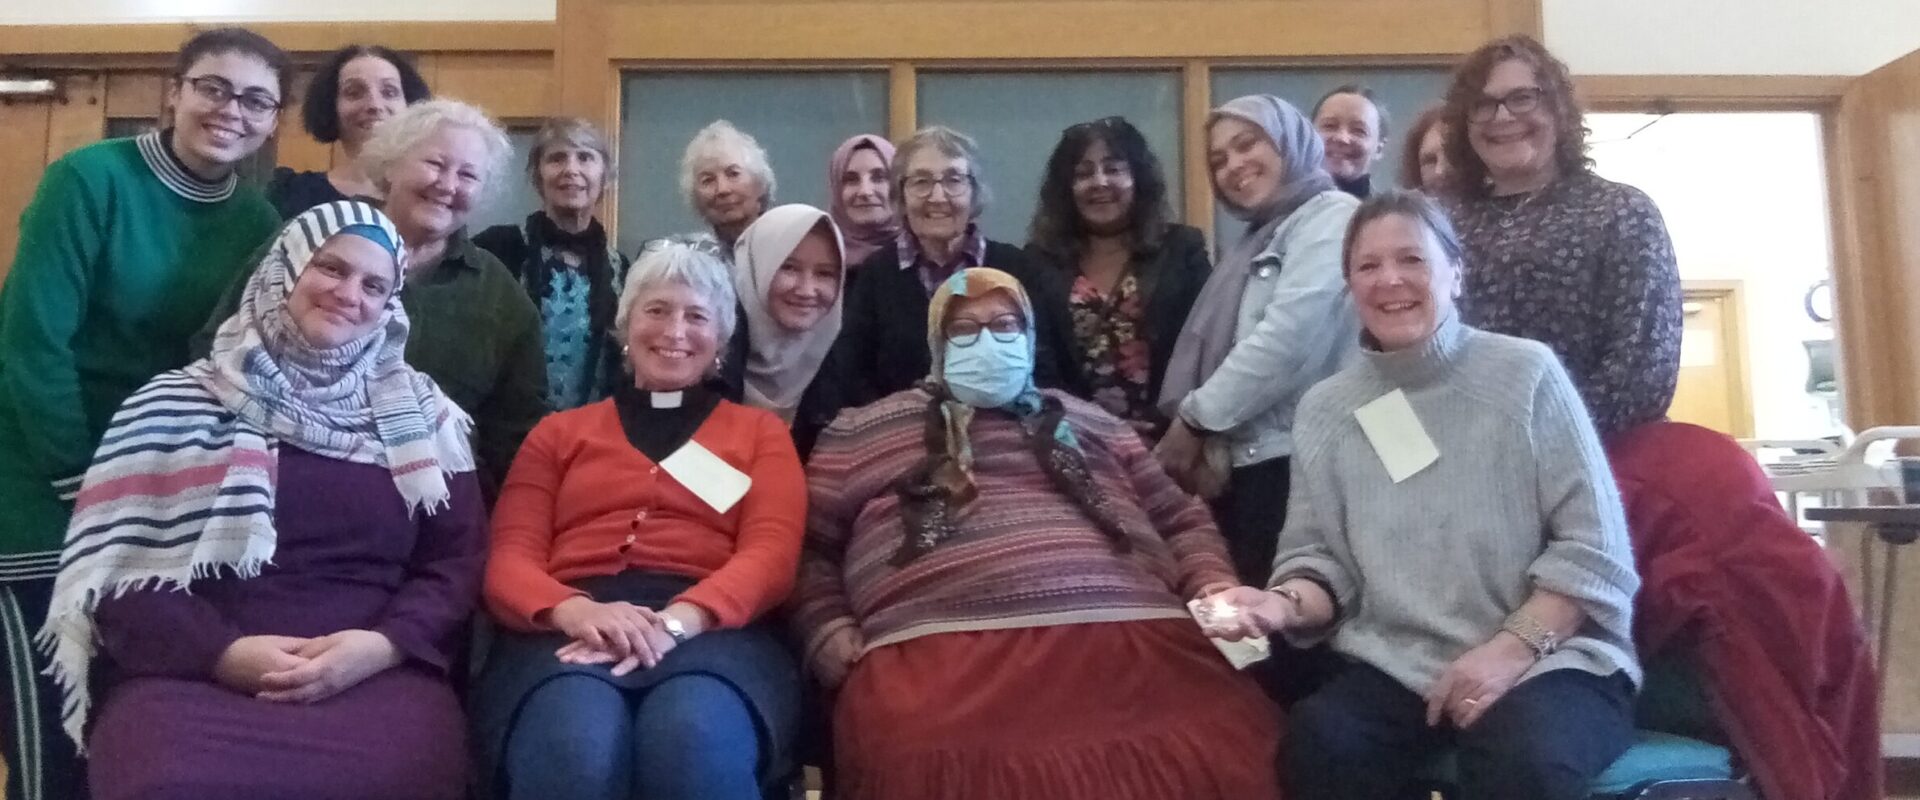 Sheffield Women's Interfaith Forum